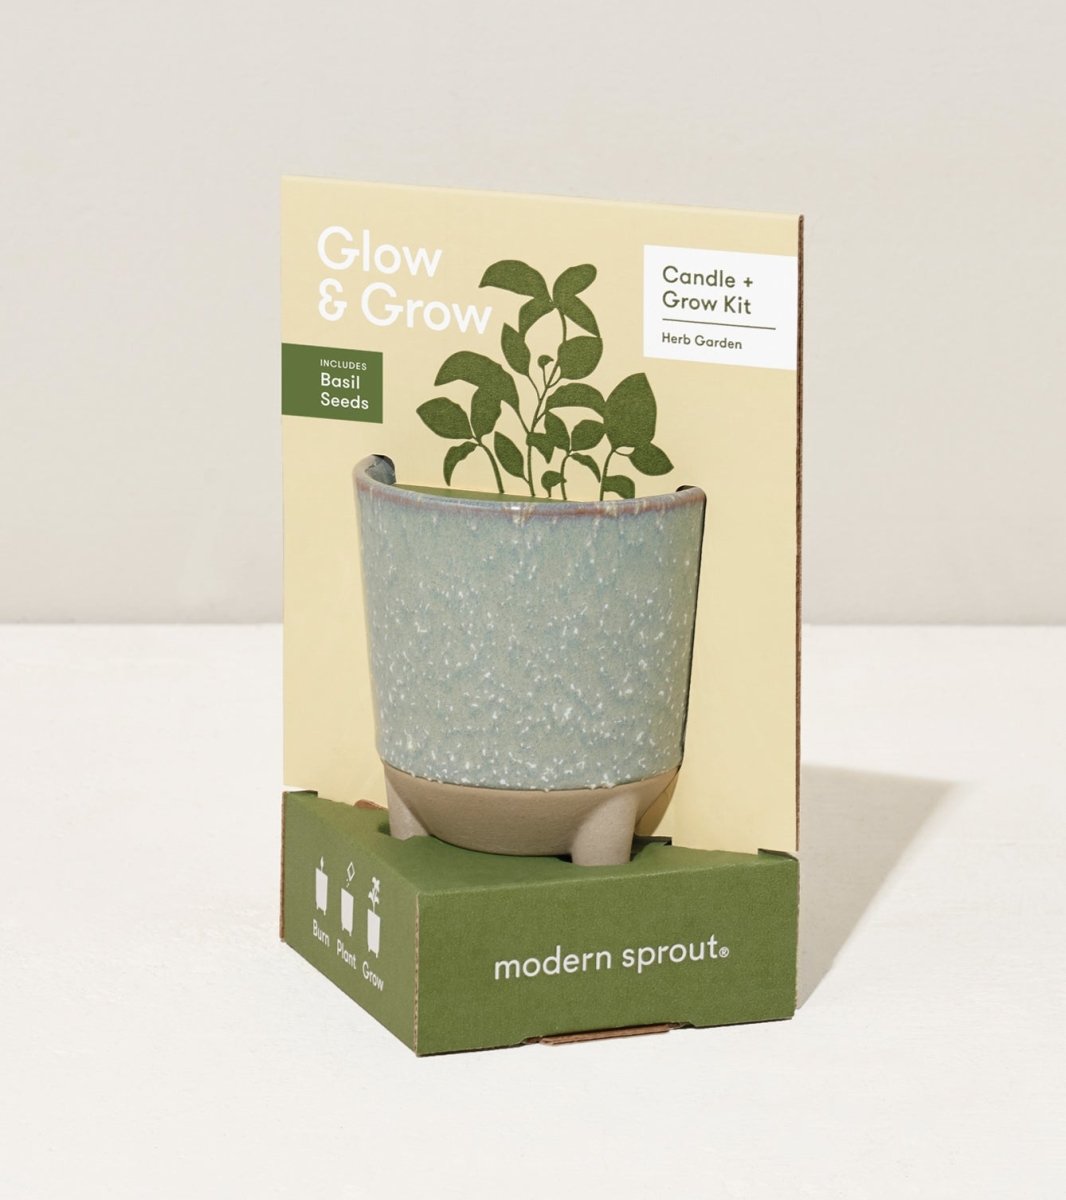 Modern Sprout Glow & Grow Kits - lily & onyx